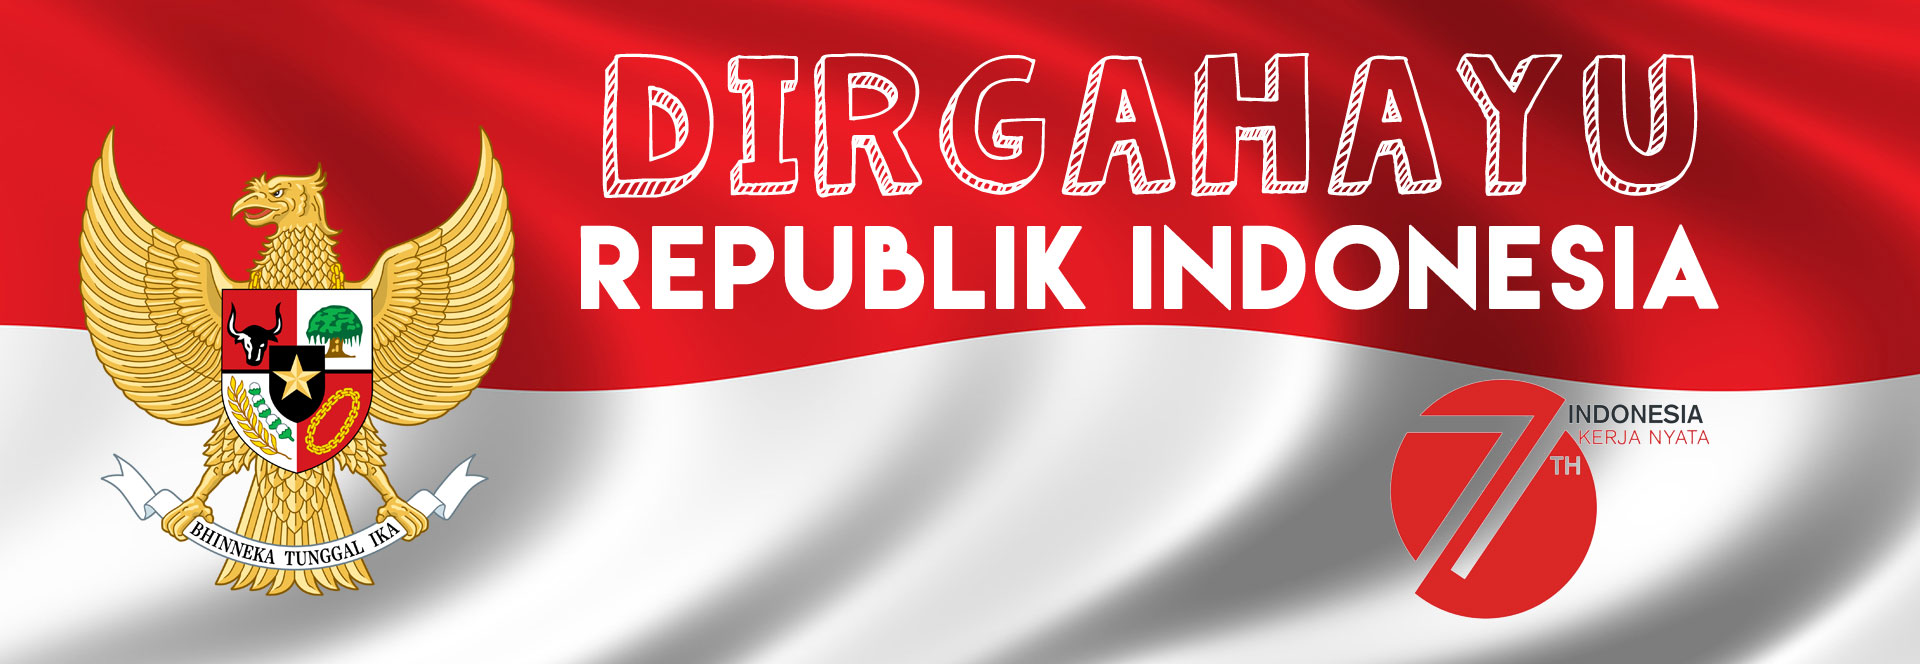 DIRGAHAYU-REPUBLIK-INDONESIA-BY-TOTO